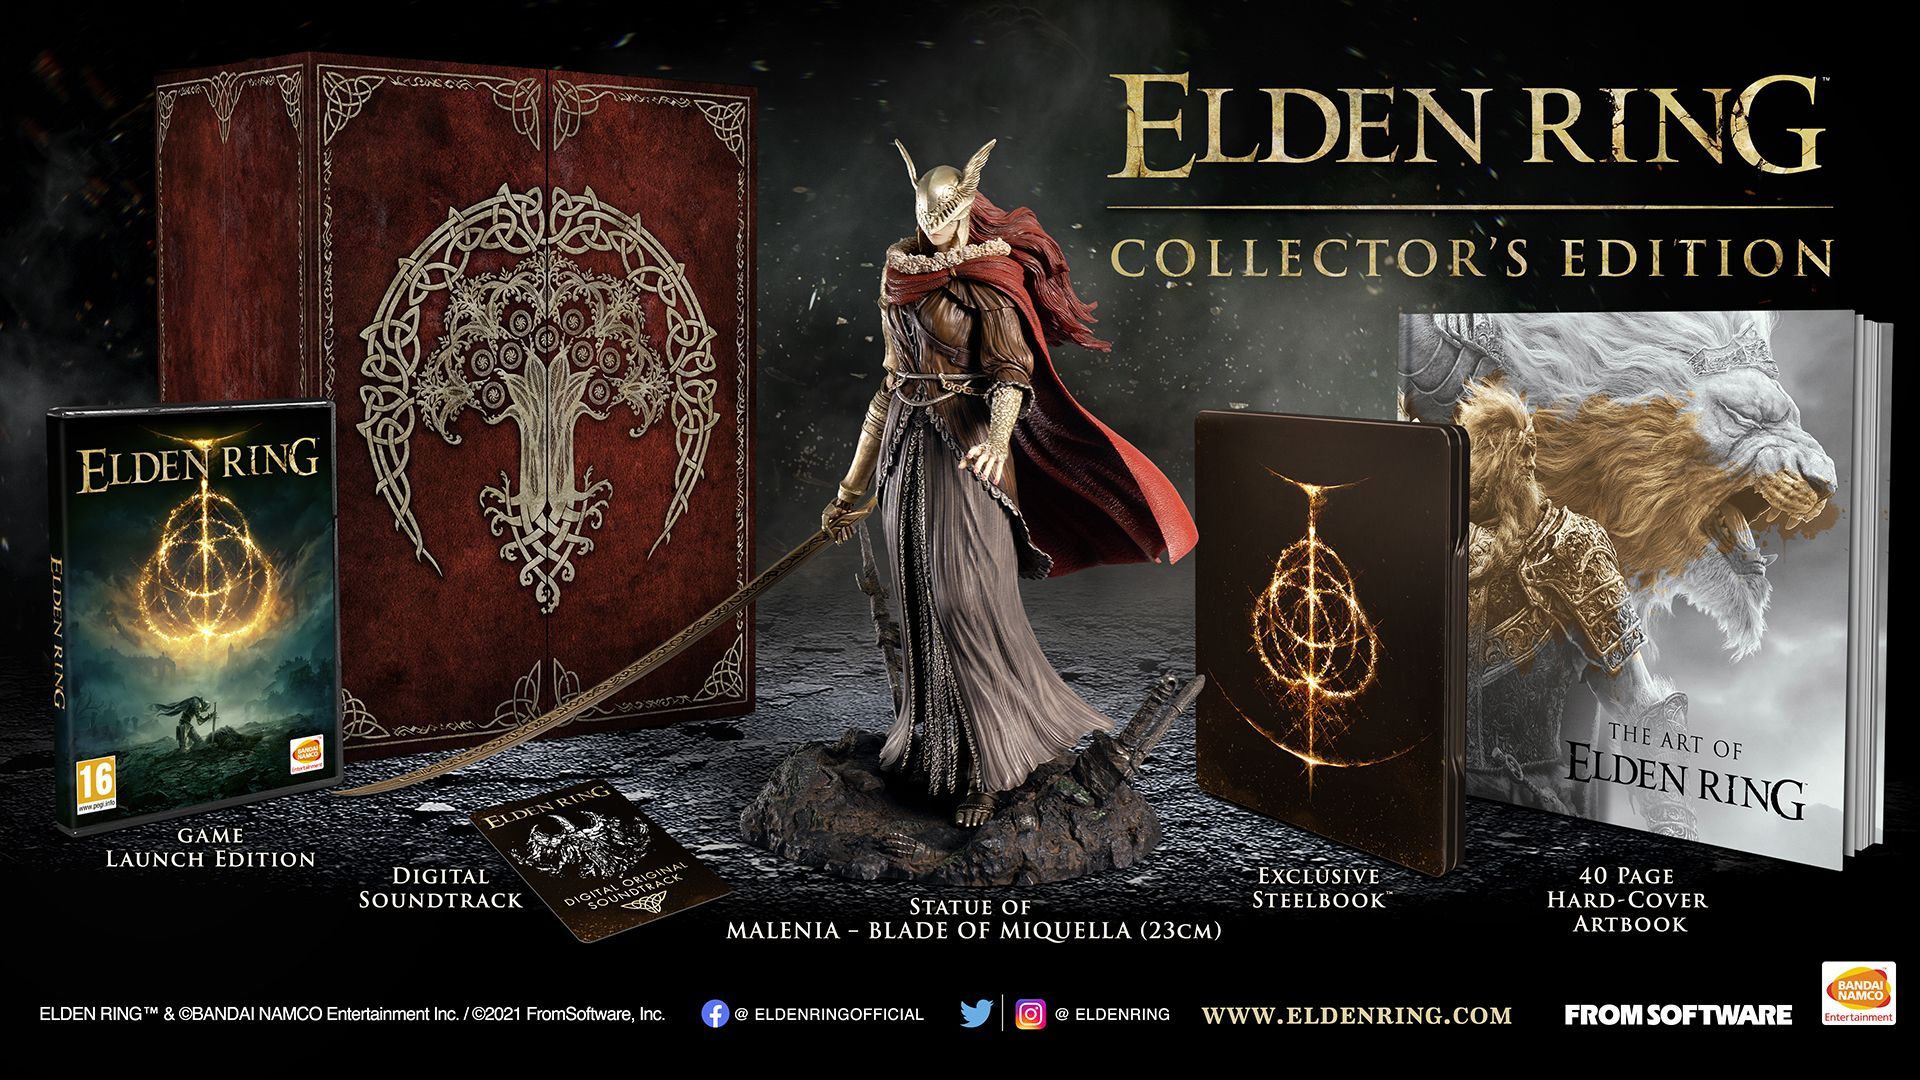 Elden Ring Collector's Edition bonuses